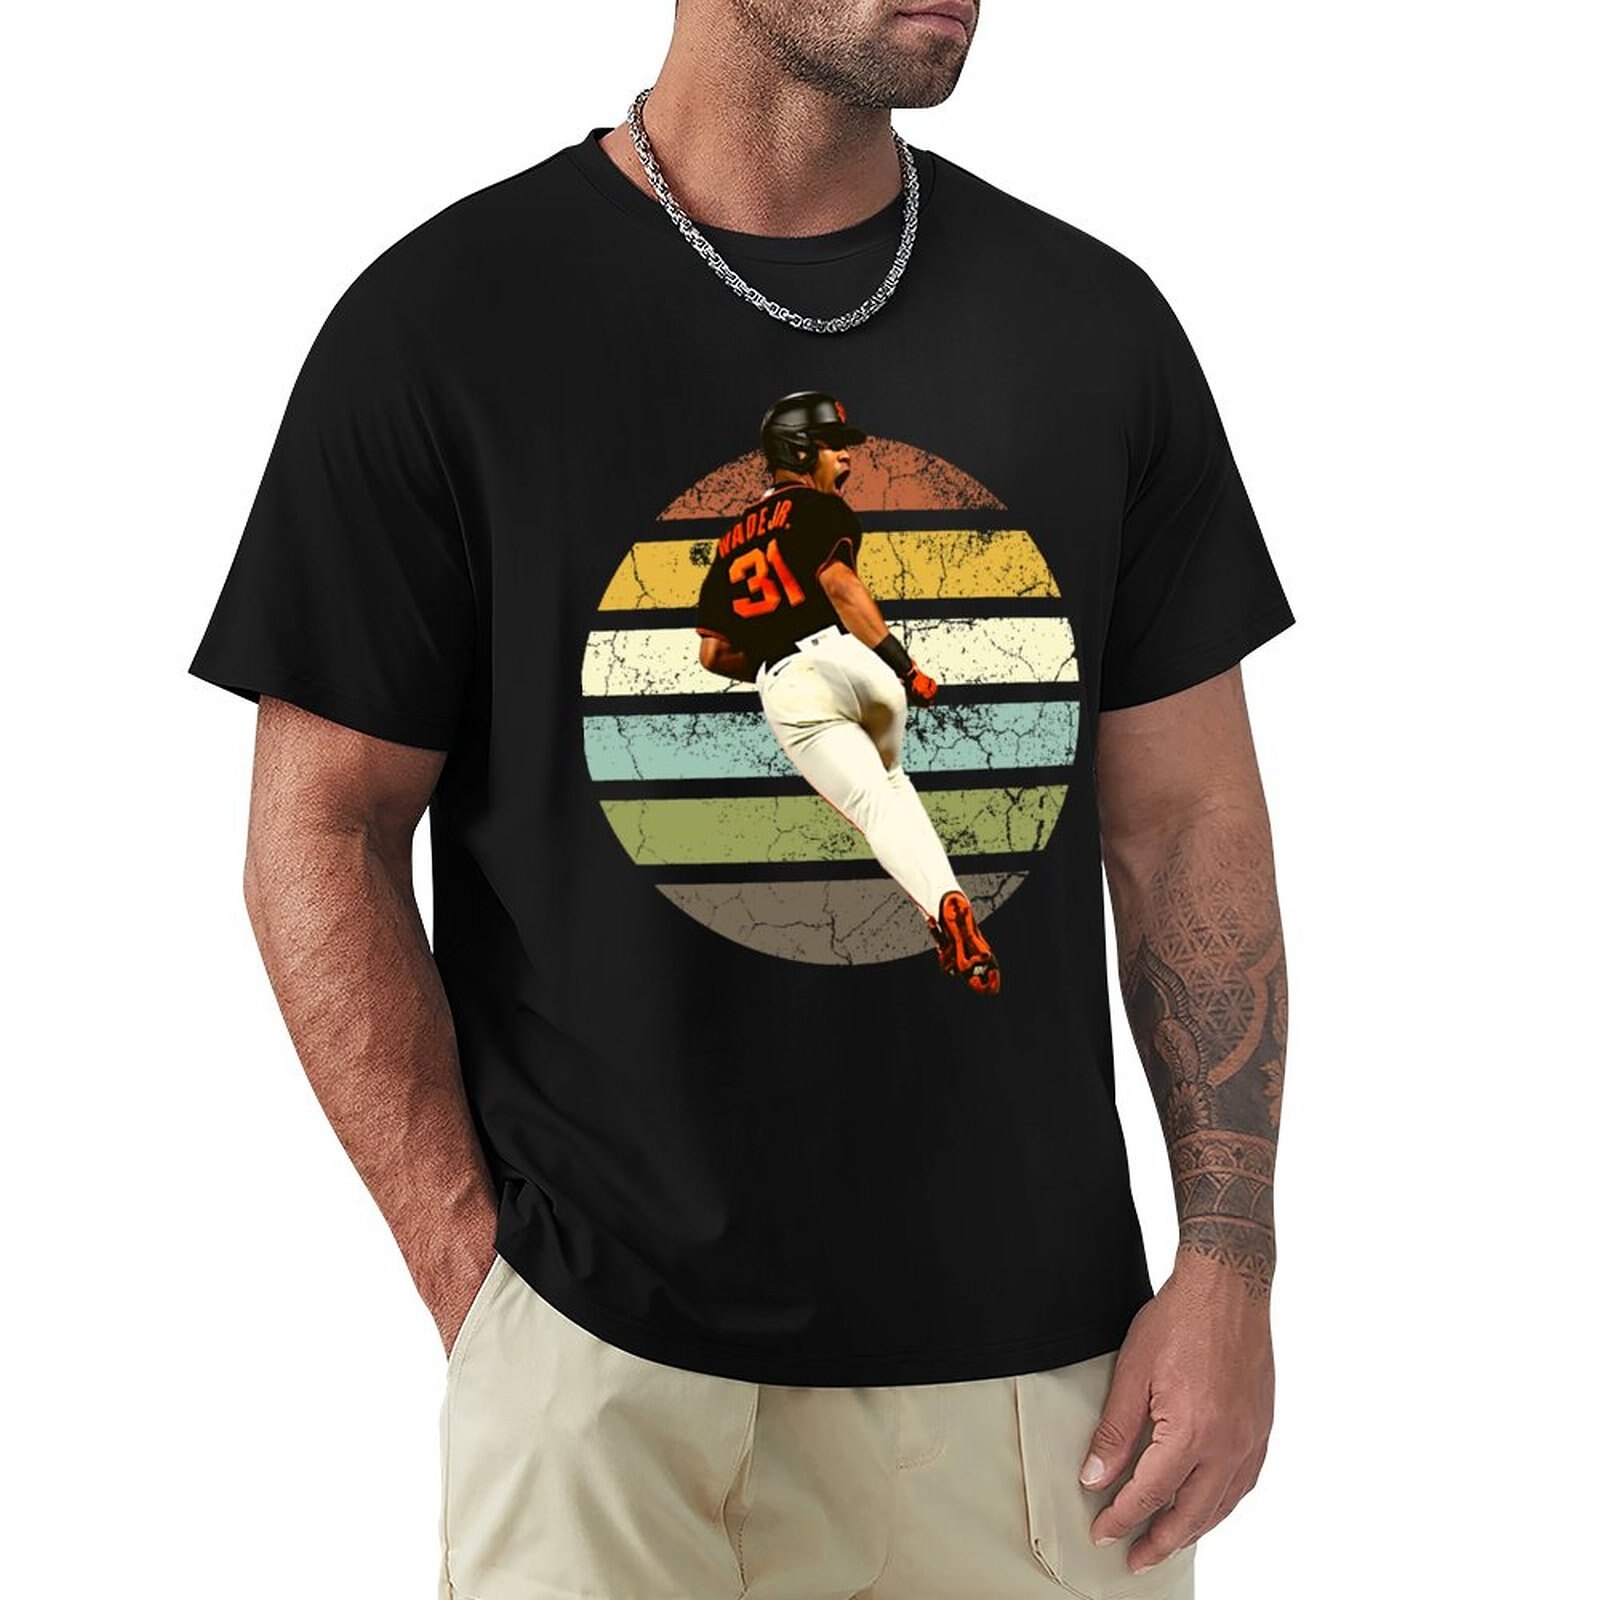  Lamonte Wade Jr. T-Shirt (Premium Men's T-Shirt, Small